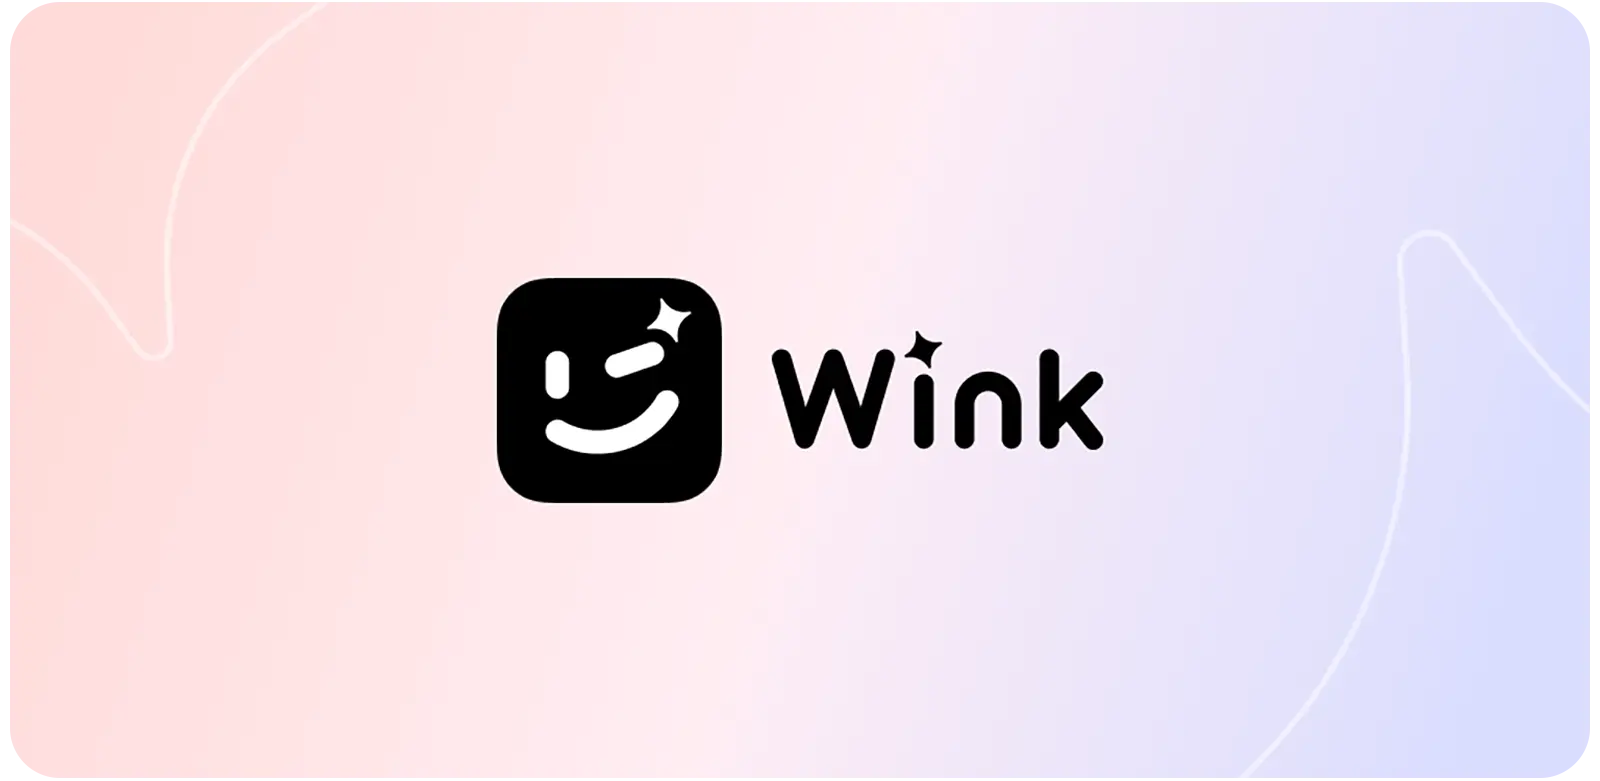 wink mod apk vip unlocked
wink mod apk premium unlocked latest version
wink mod apk (unlimited gems download)
Wink Video MOD APK
Download Wink MOD APK
Wink APK MOD Download